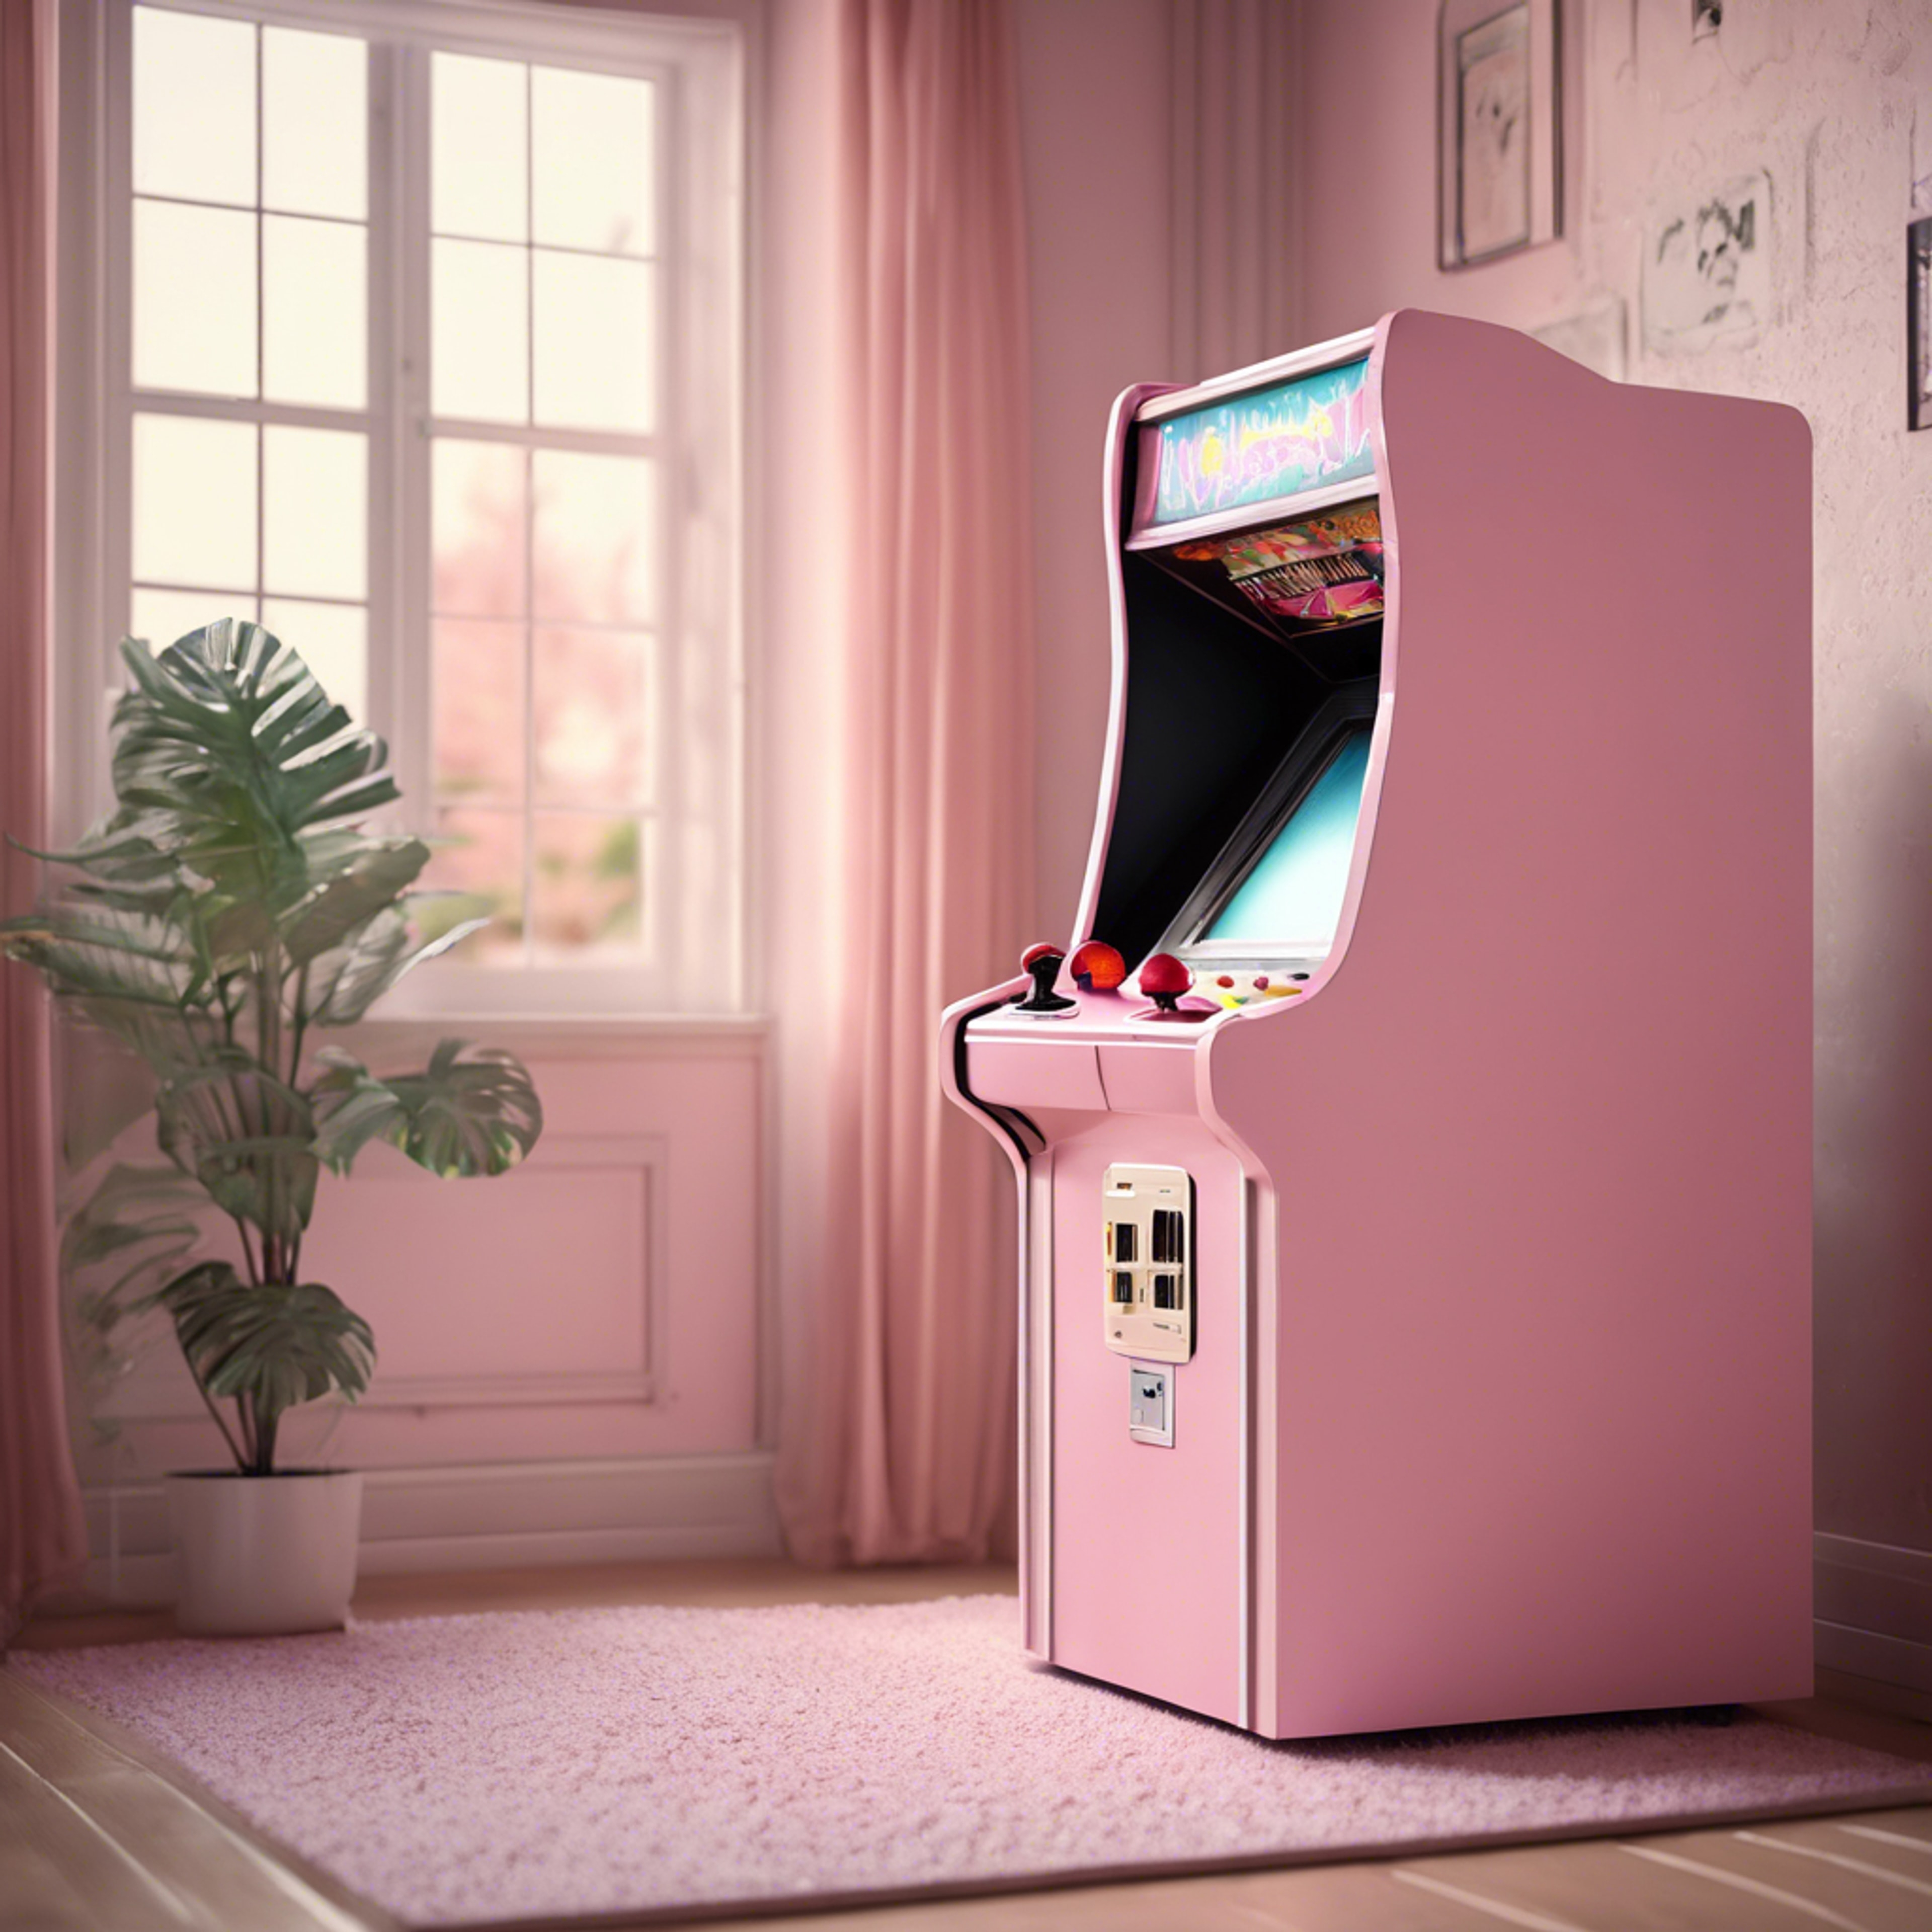 A pastel pink retro arcade machine in a cute, feminine room during sunrise. Шпалери[d6fdc55d66e84aad939c]